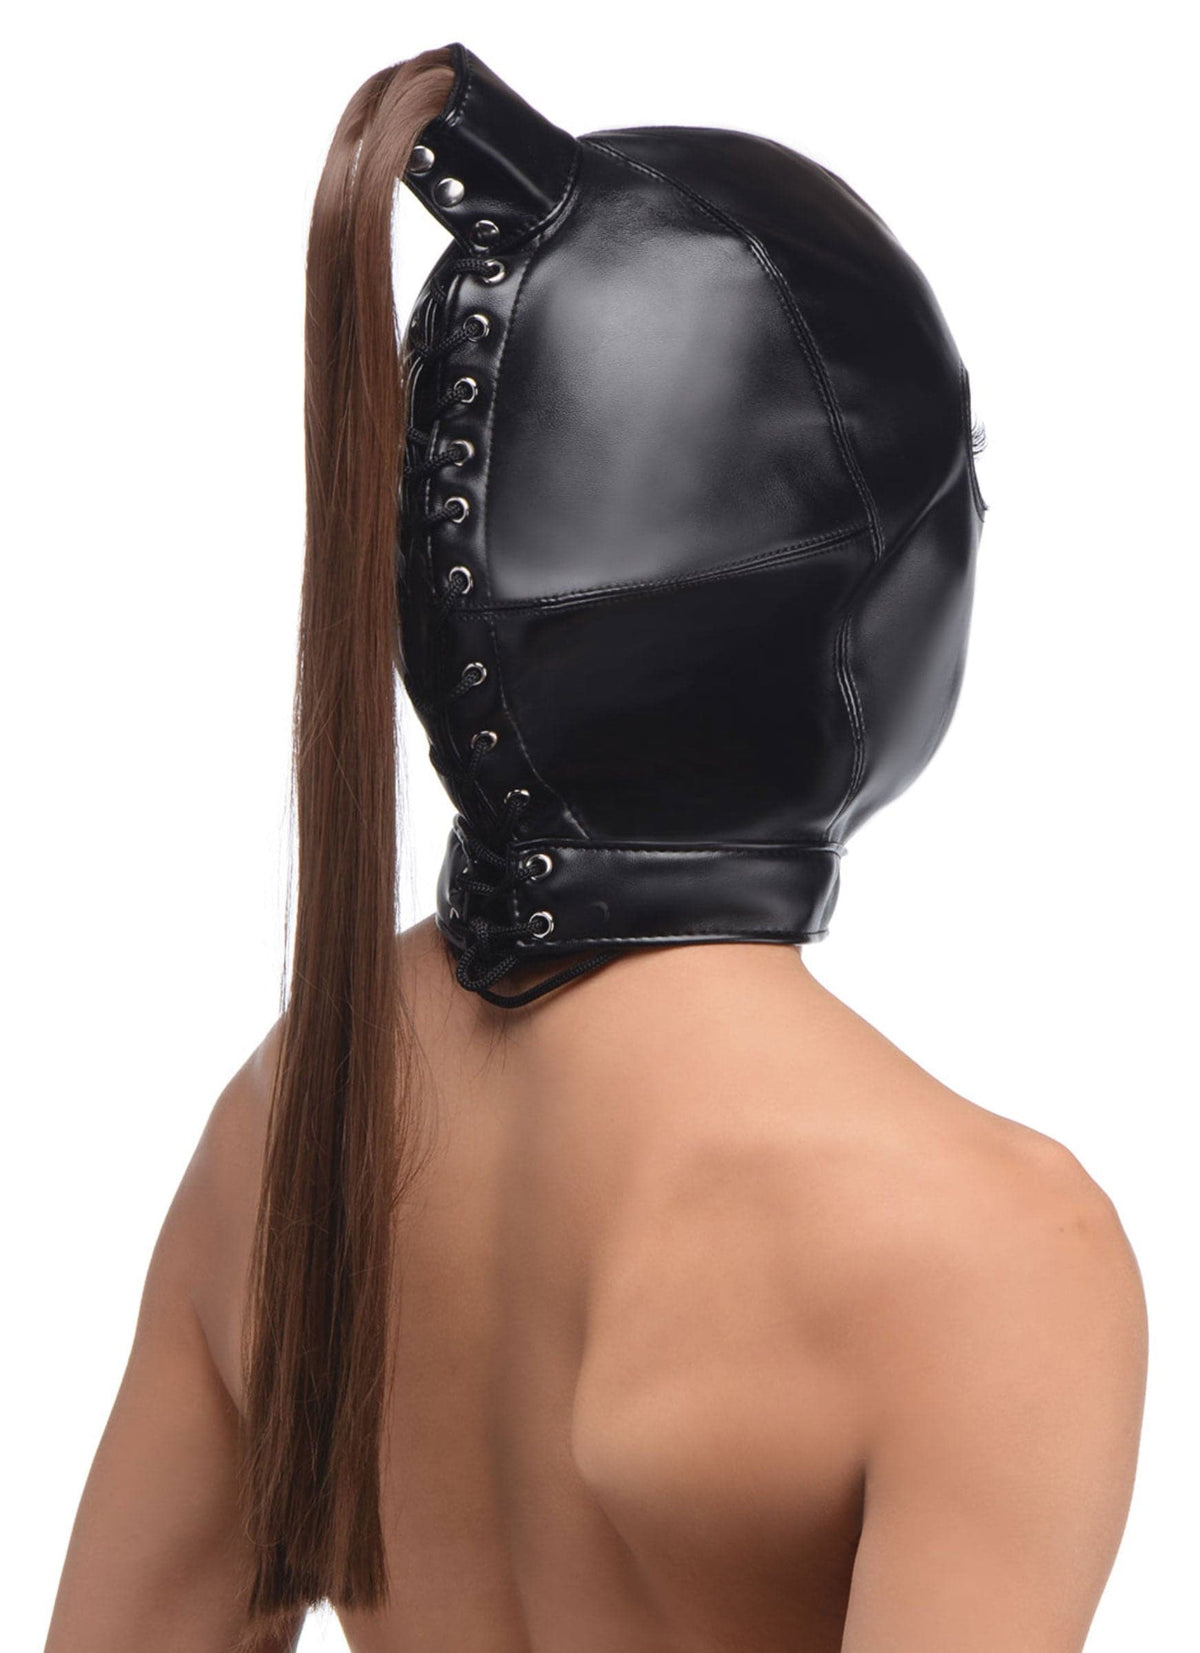 ponytail bondage hood black